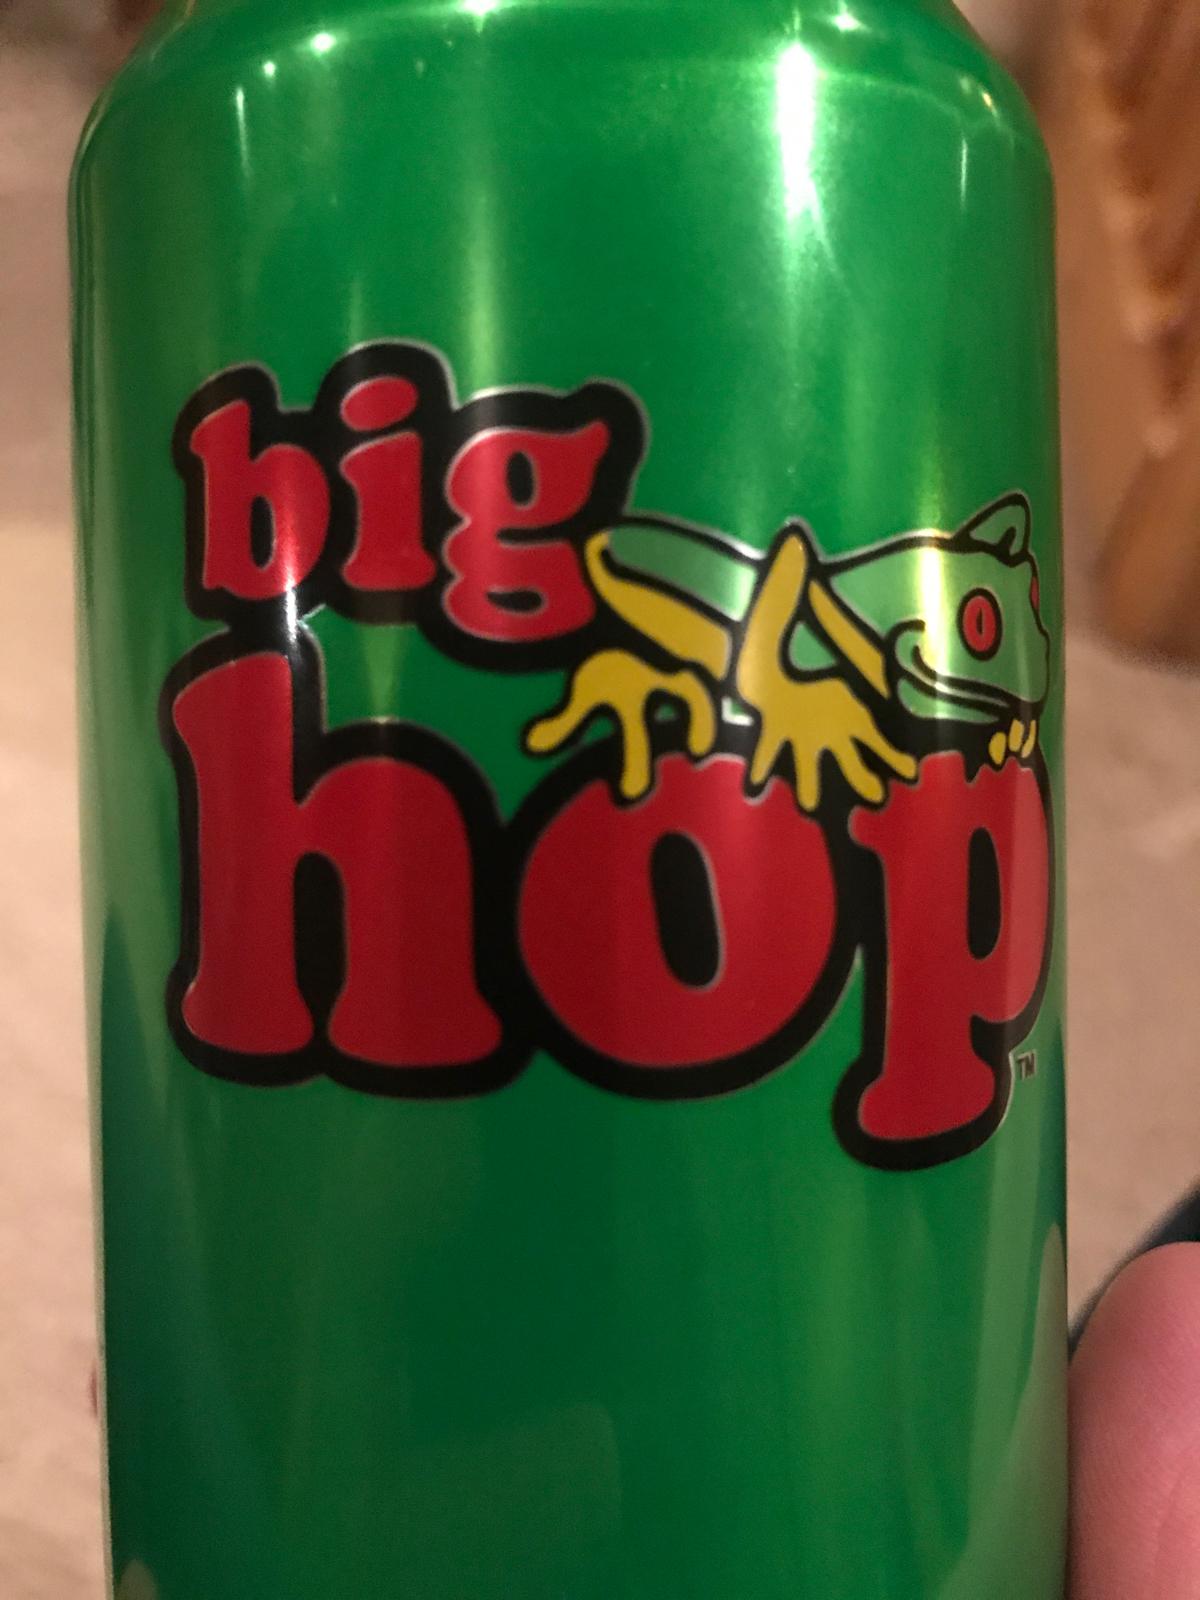 Big Hop IPA